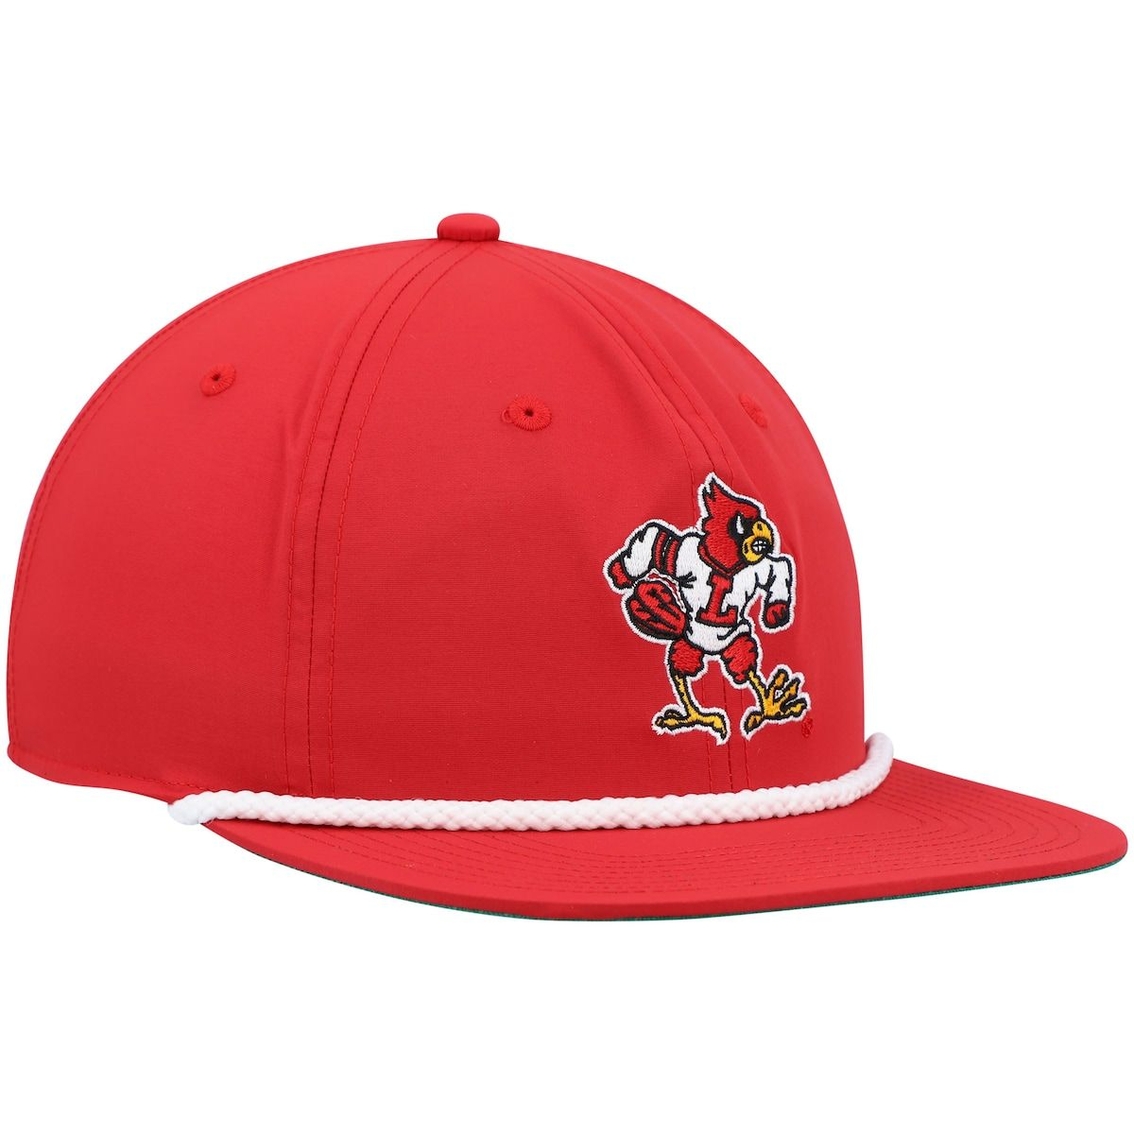 Adidas / Men's Louisville Cardinals Cardinal Red Victory Performance Hat